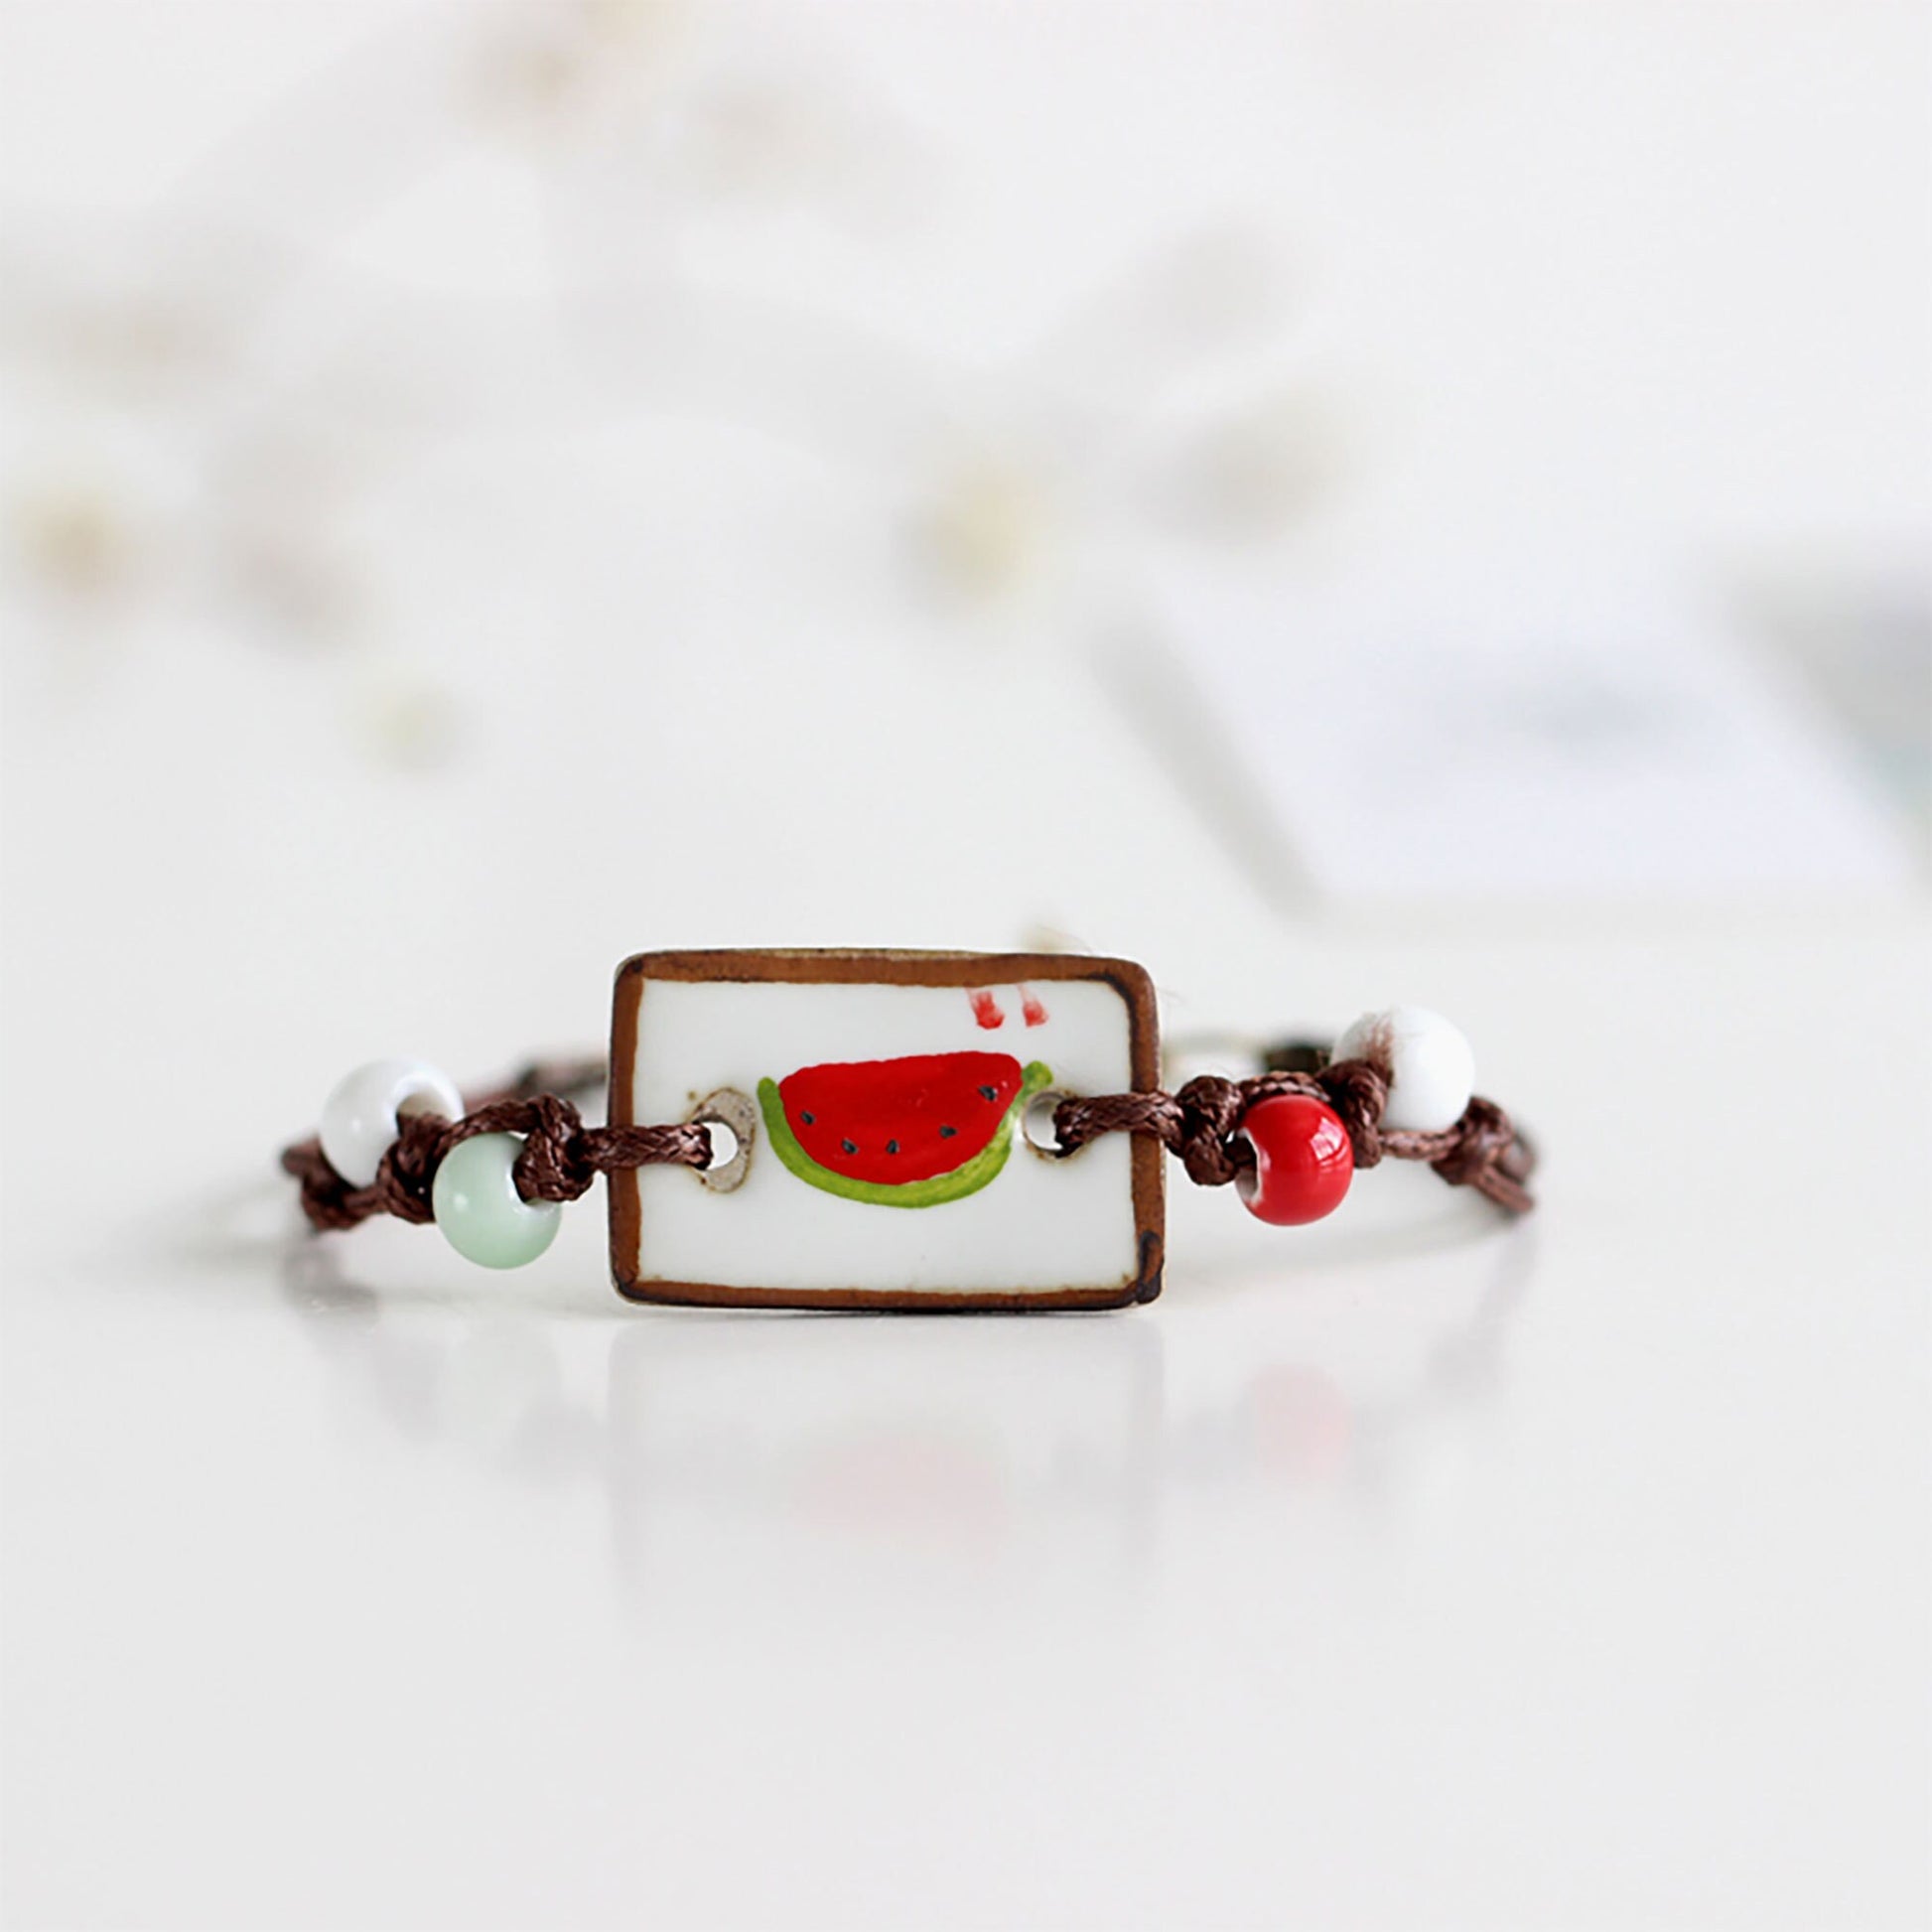 Watermelon Ceramic Wristband Necklace-Pendant Set Clay Jewelry Gorgeous Summer Fashion Girl Outdoor Adventures Friends Sandia Pulsera Collar